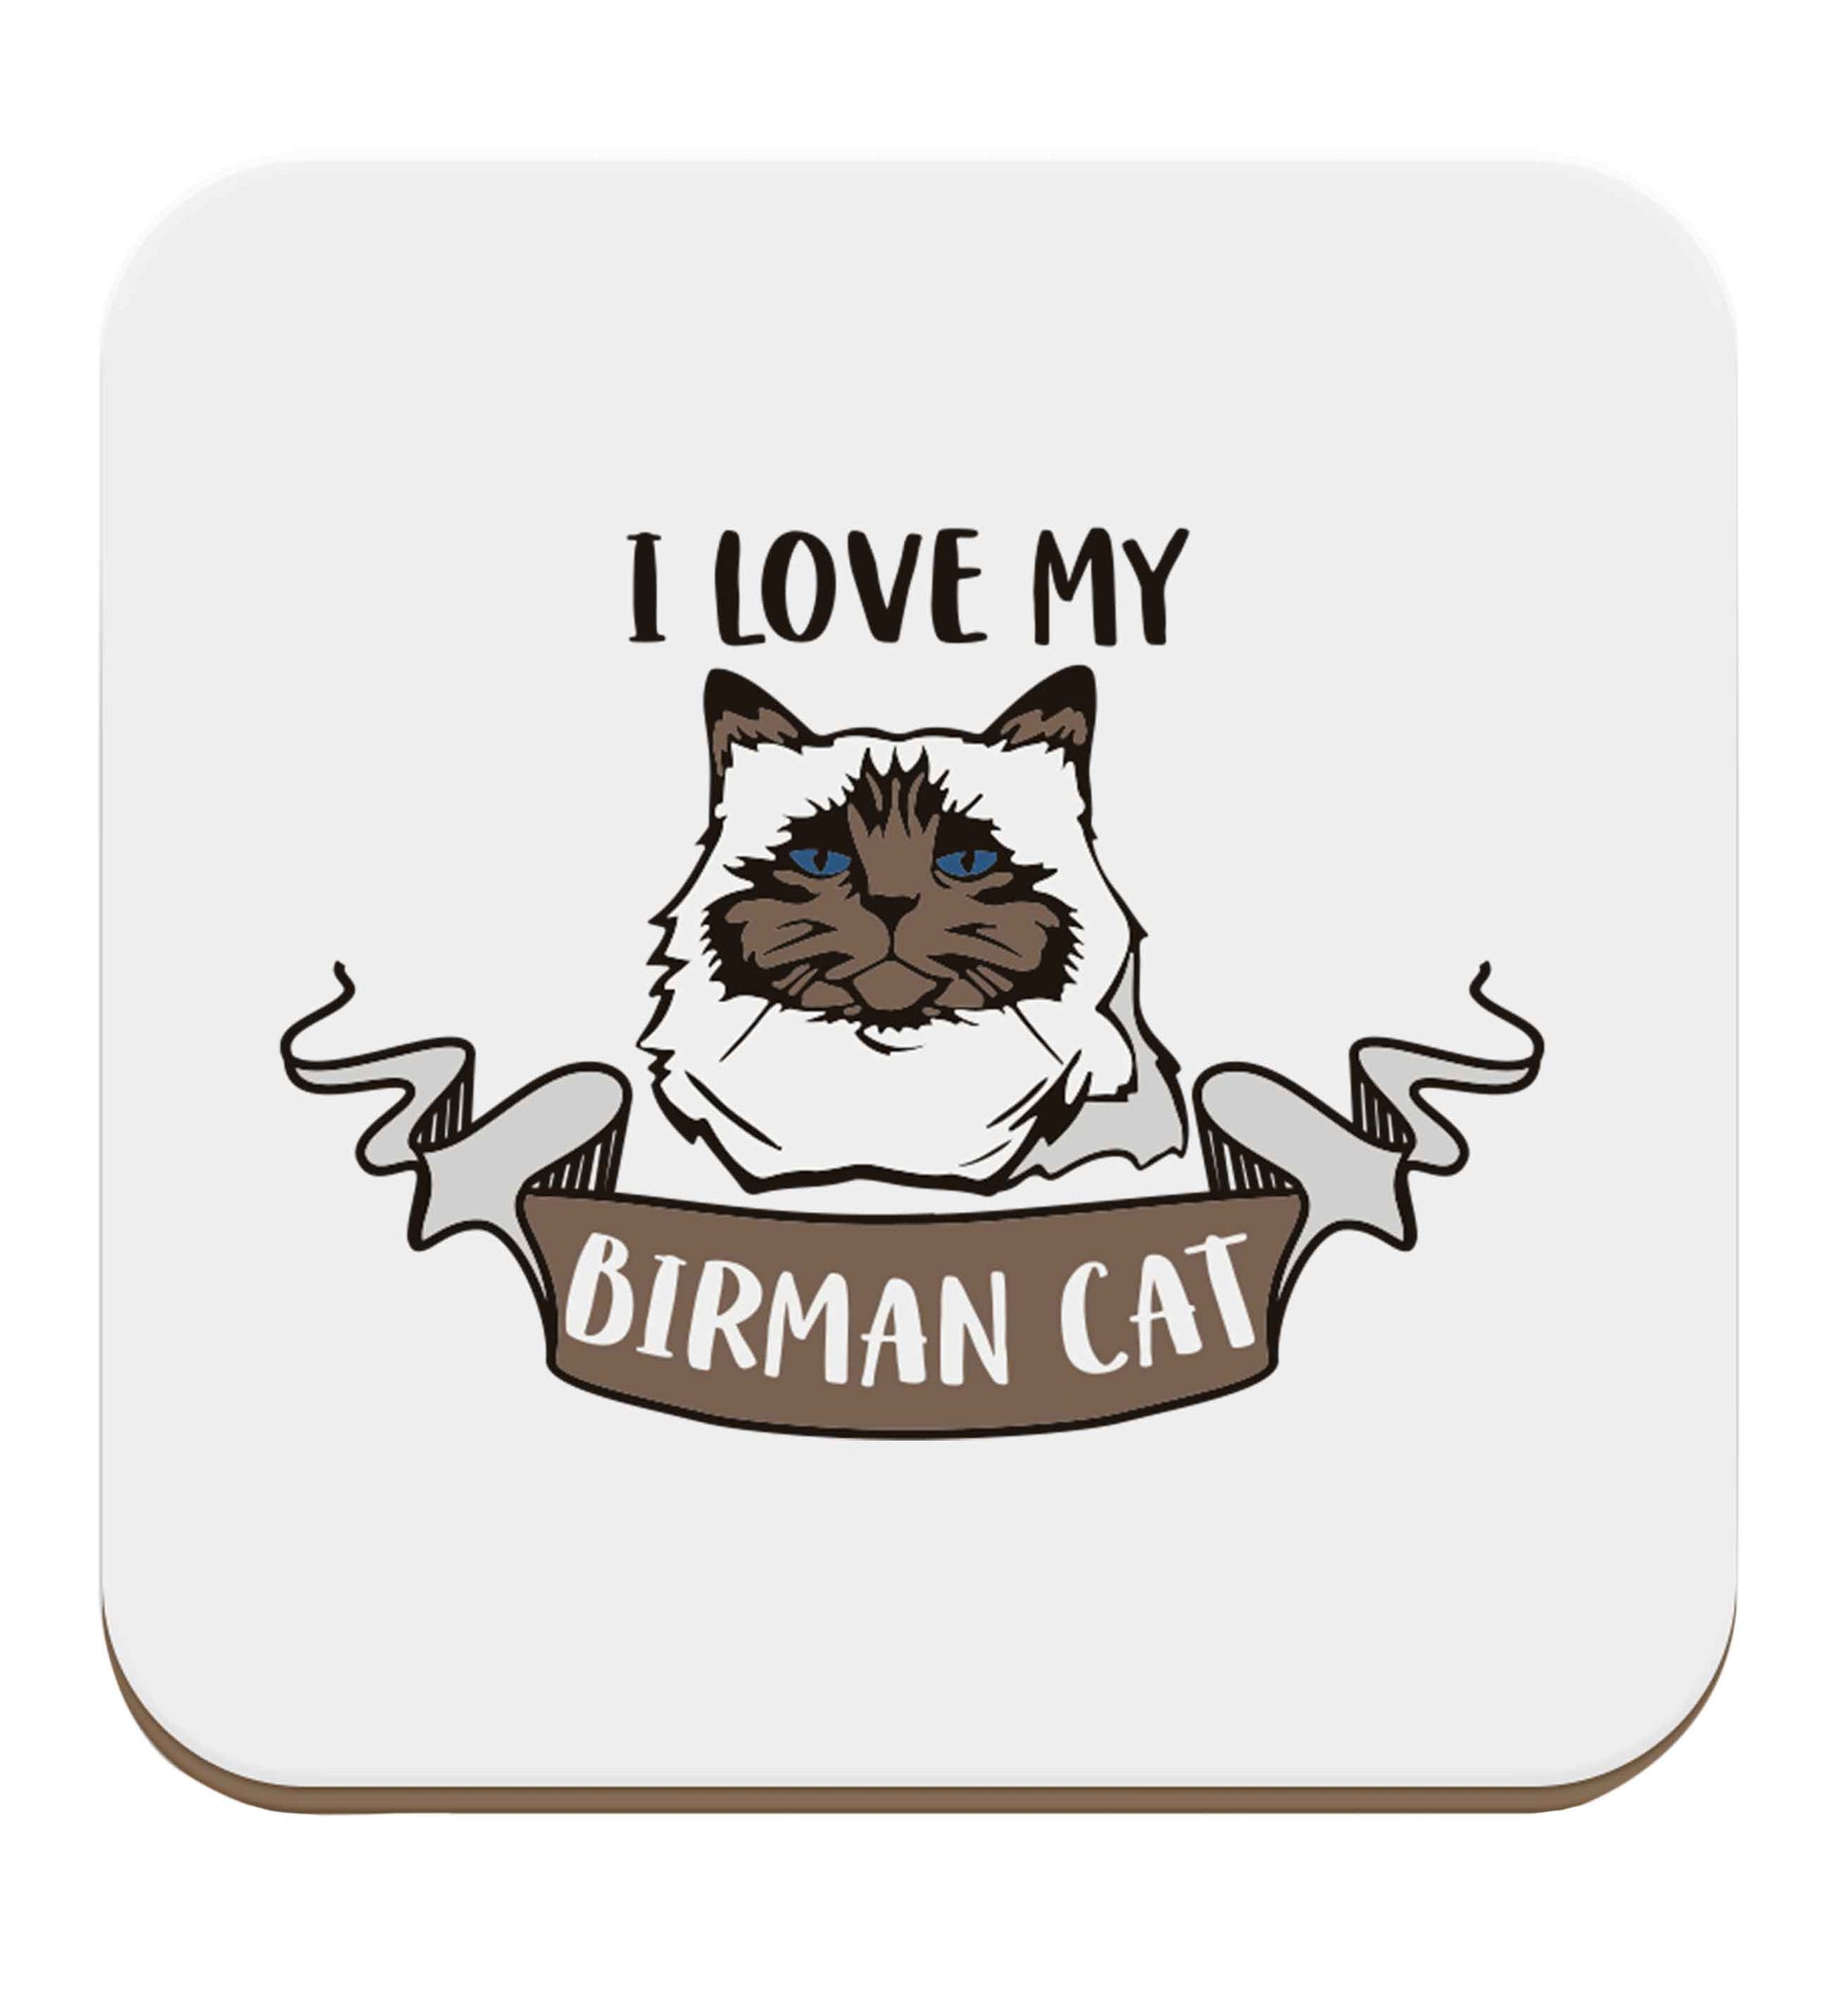 I love my birman cat set of four coasters